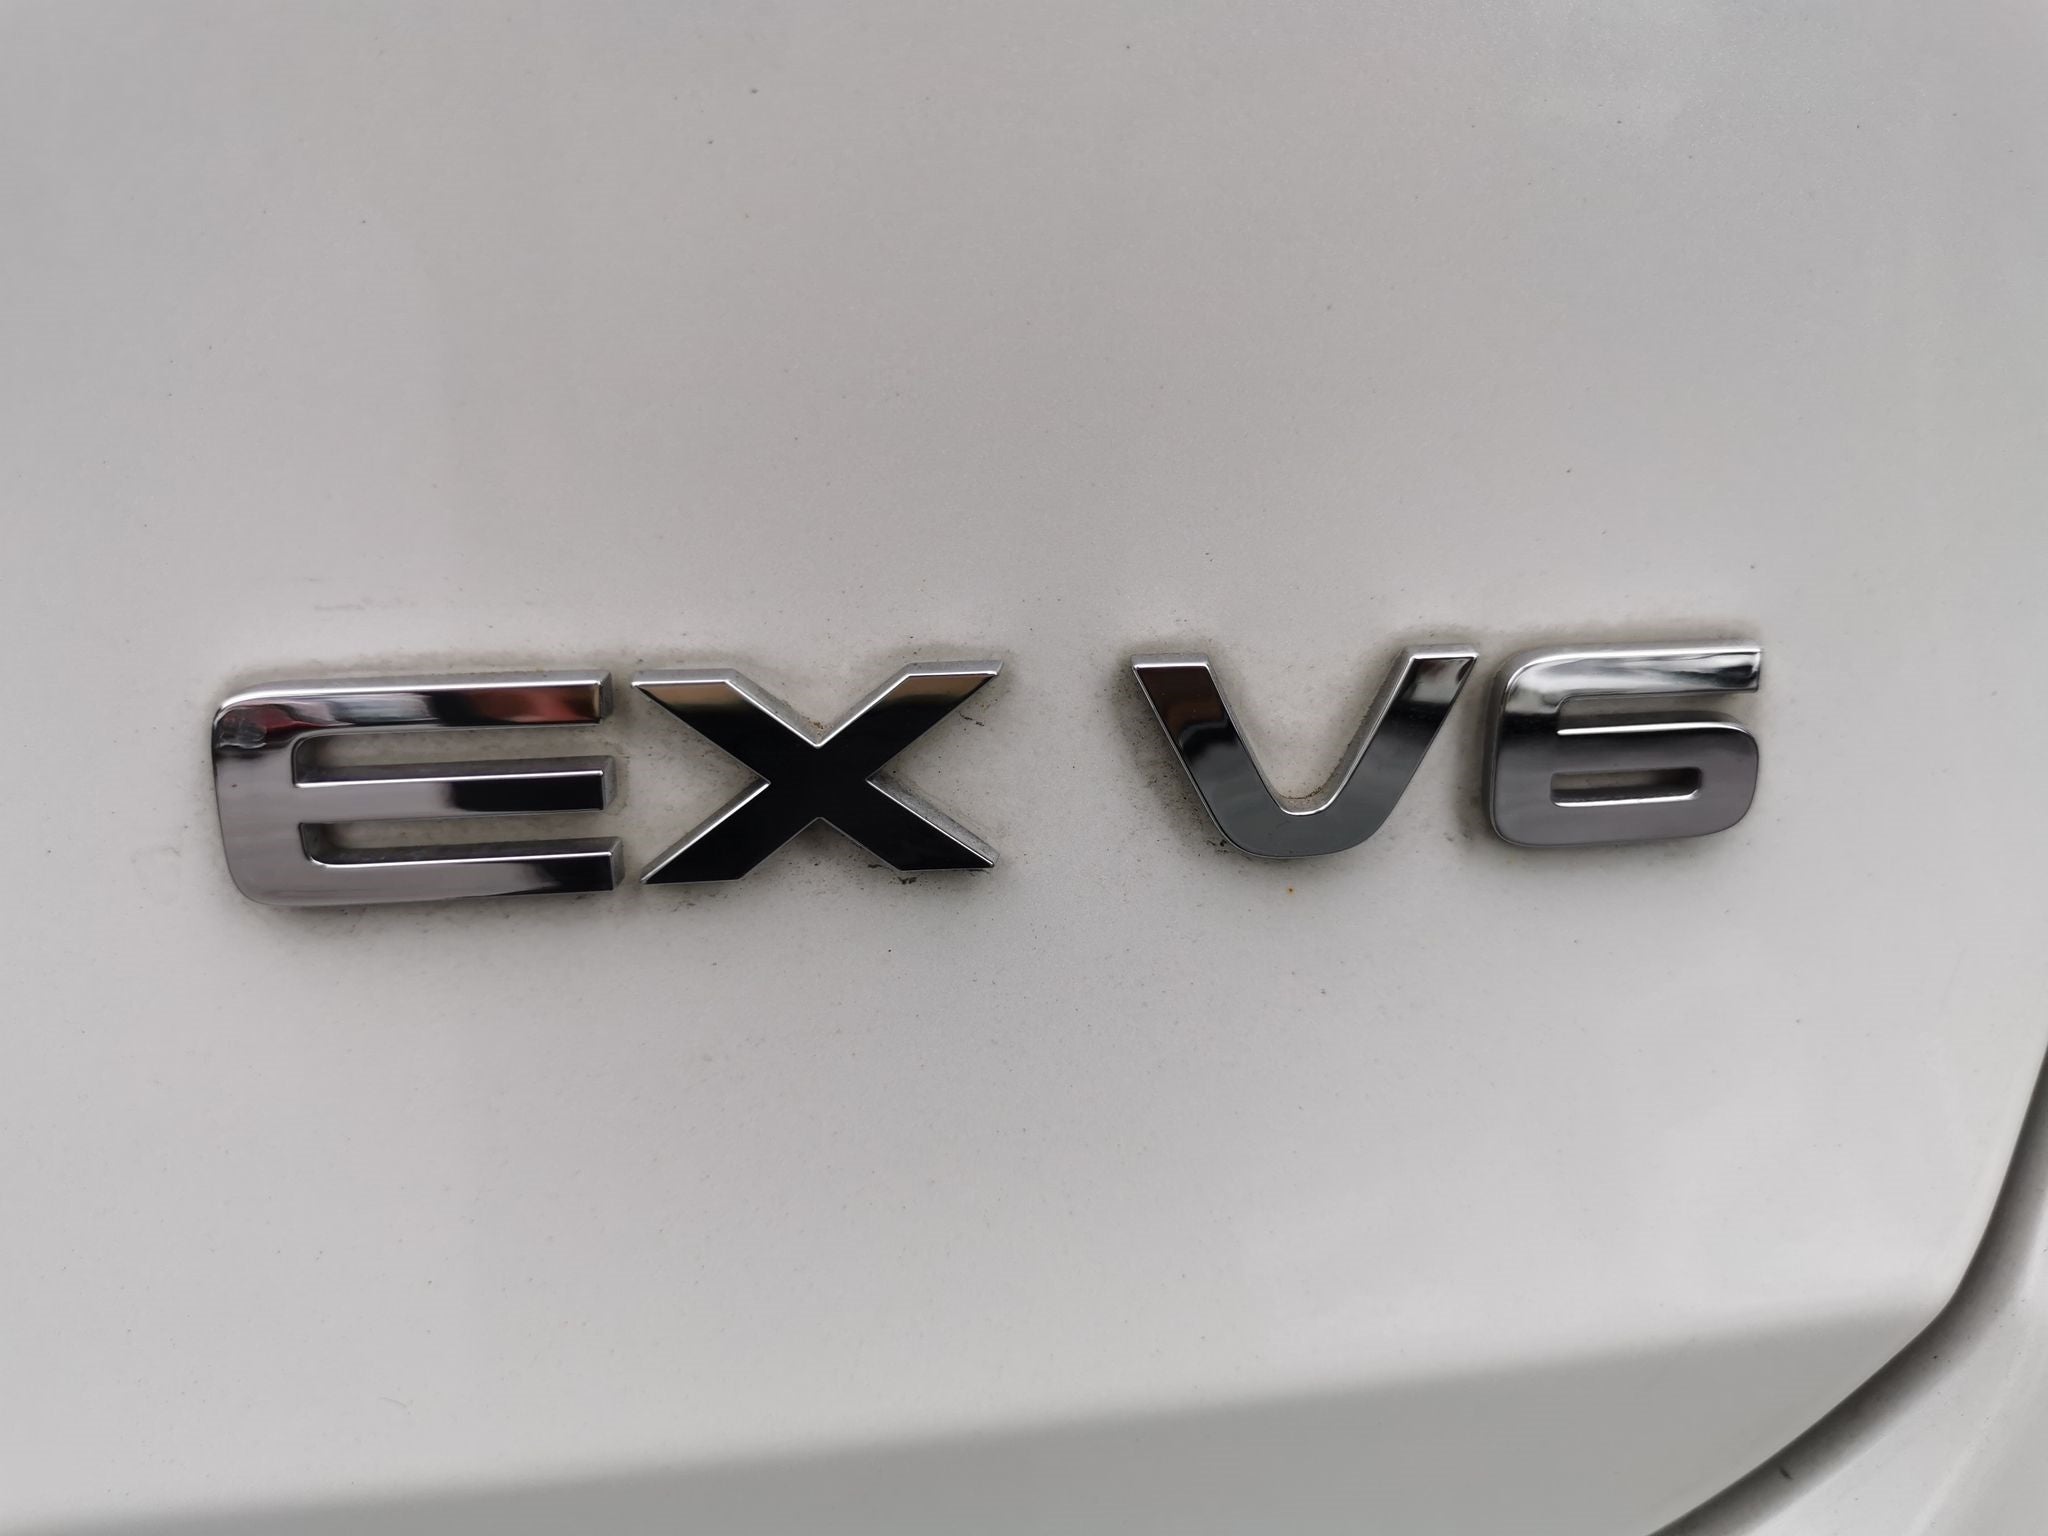 2017 Kia Sorento 3.3 V6 EX Piel 7 Pasajeros At